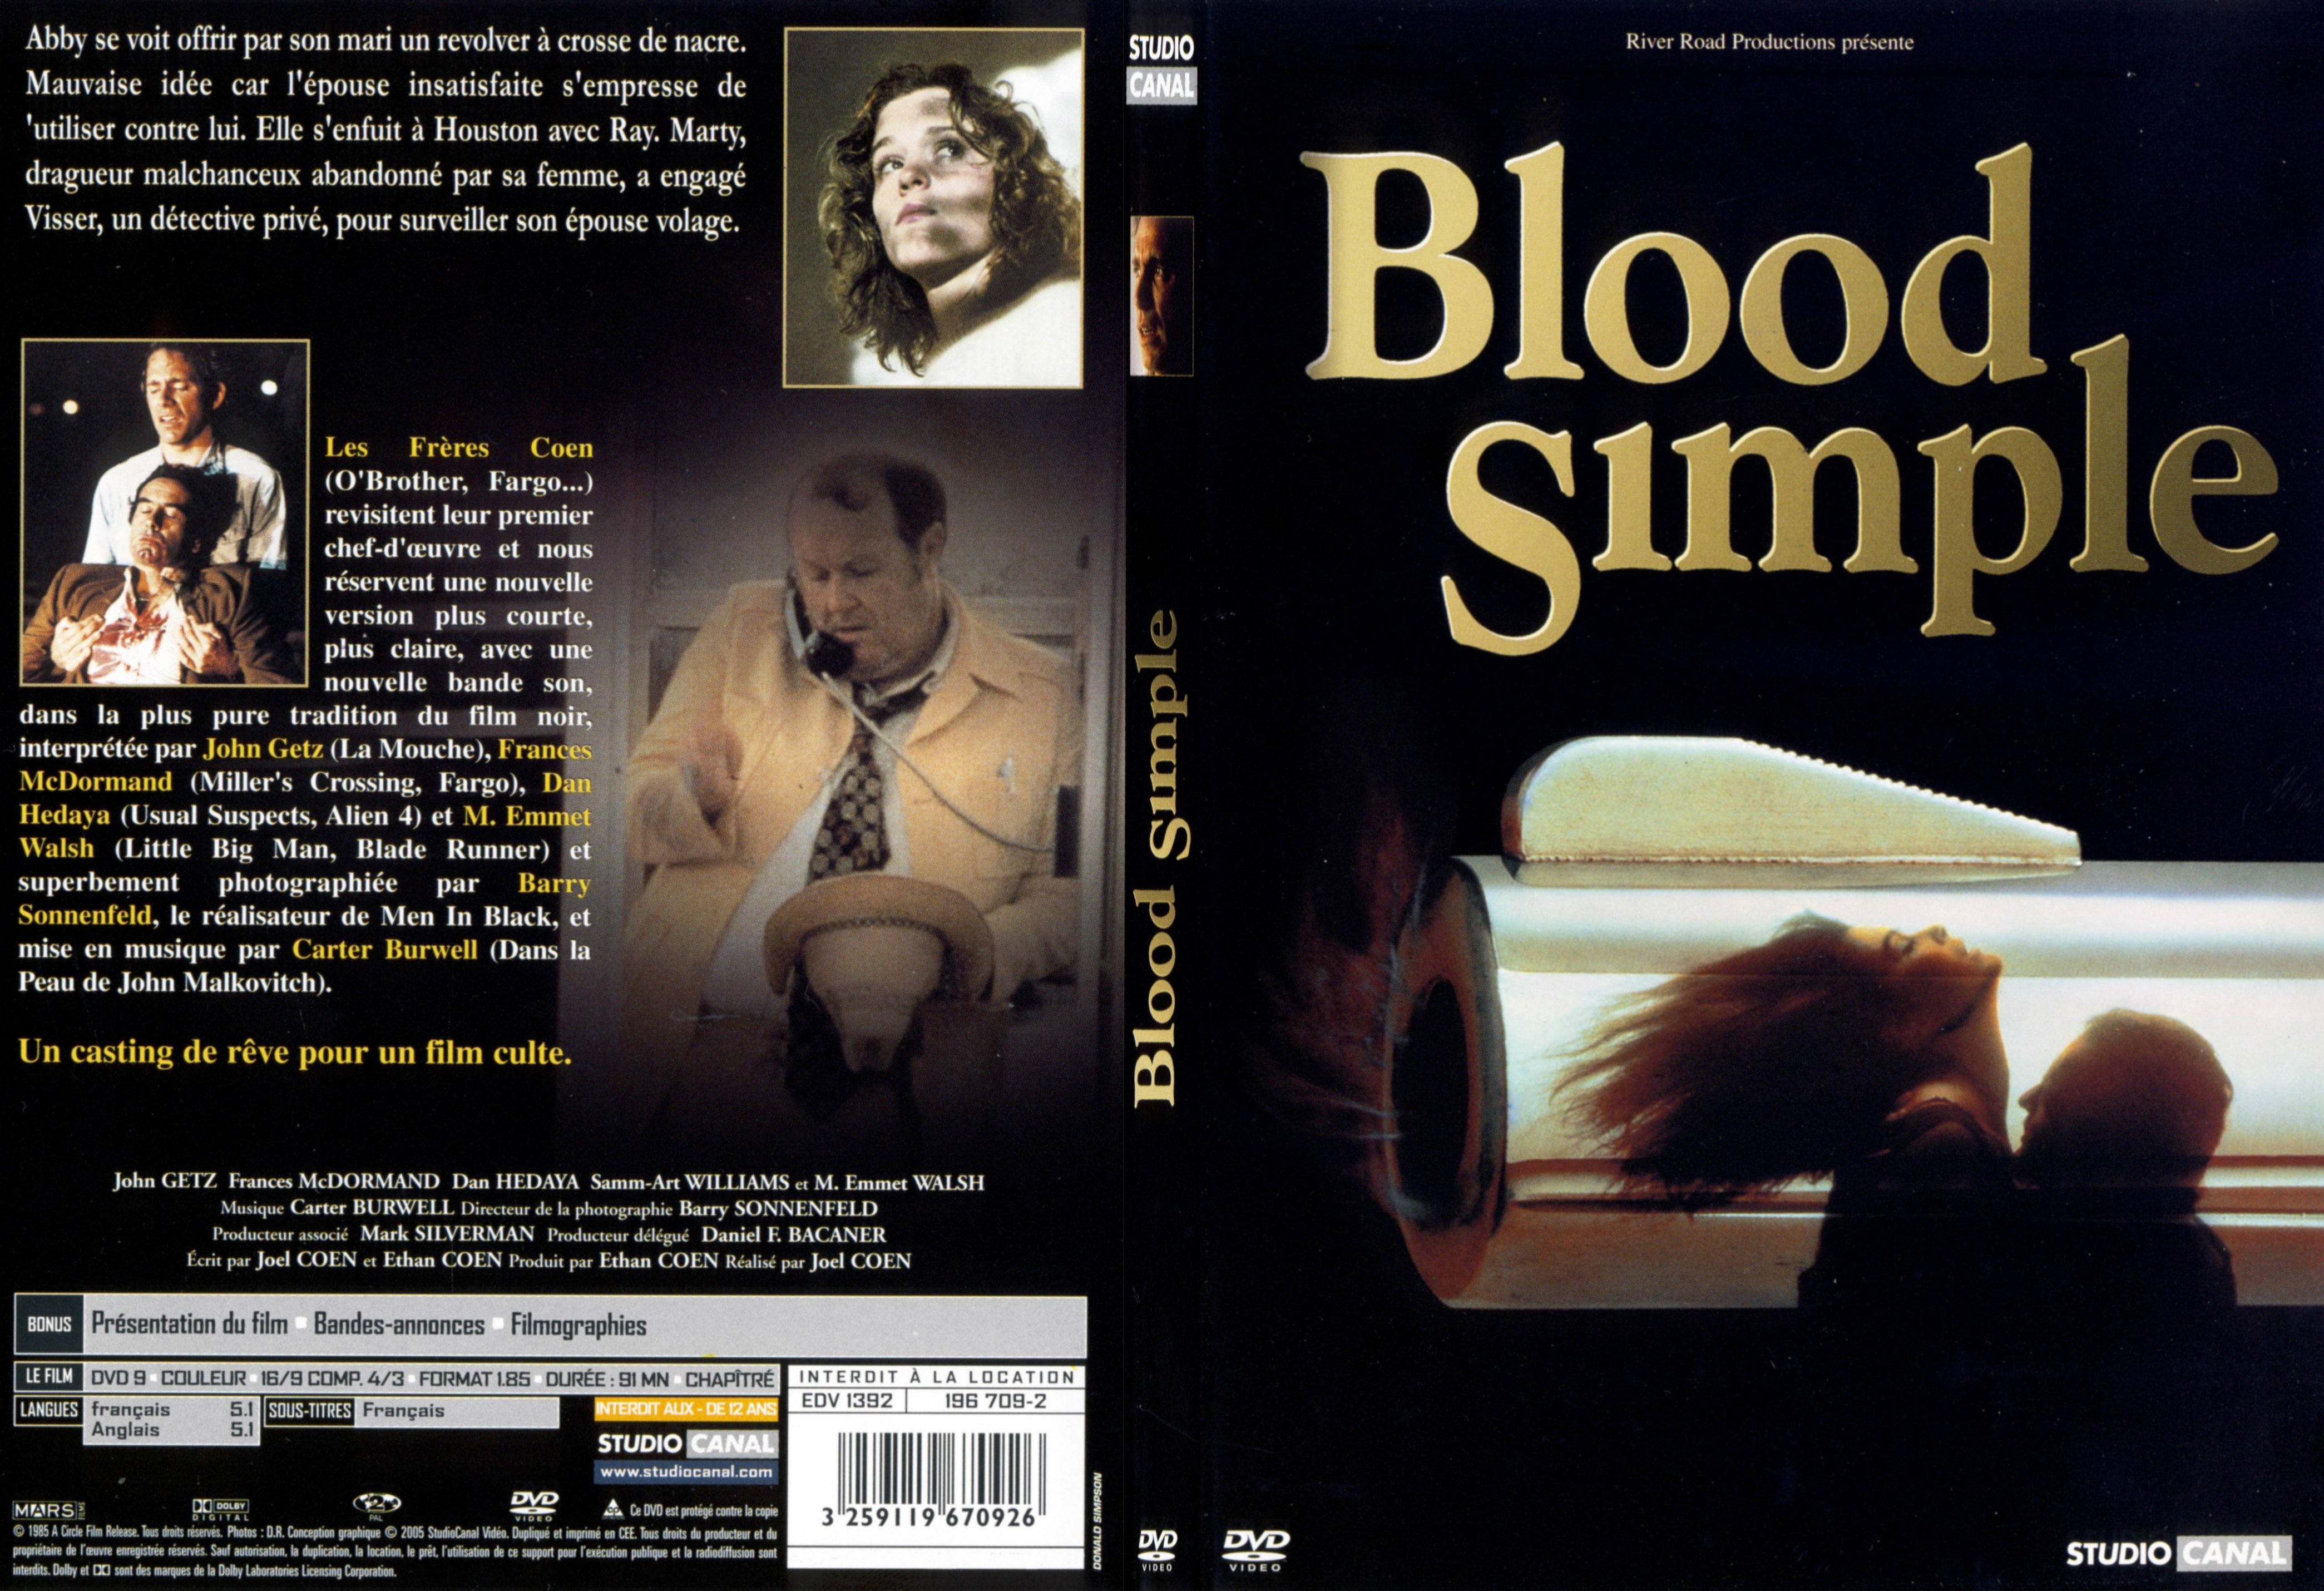 Jaquette DVD Blood simple - SLIM